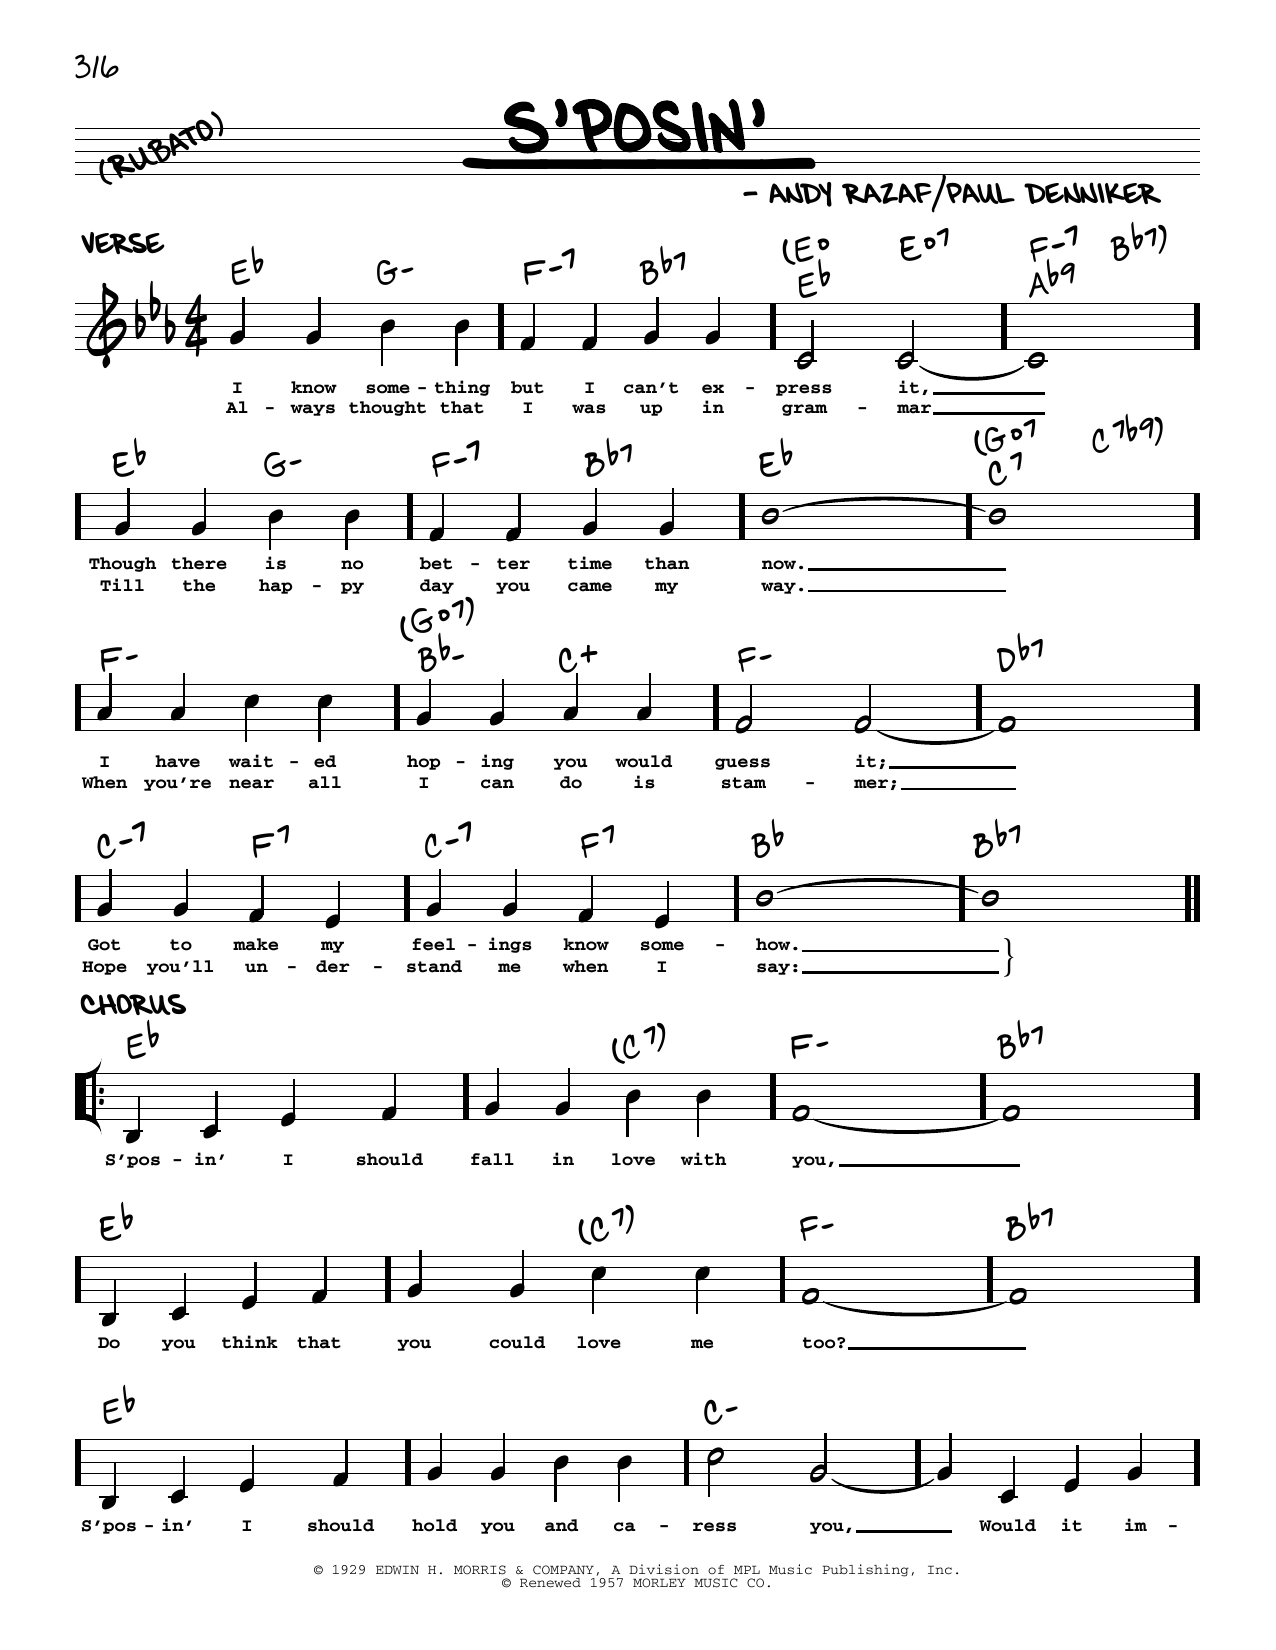 Andy Razaf S'posin' (arr. Robert Rawlins) Sheet Music Notes & Chords for Real Book – Melody, Lyrics & Chords - Download or Print PDF